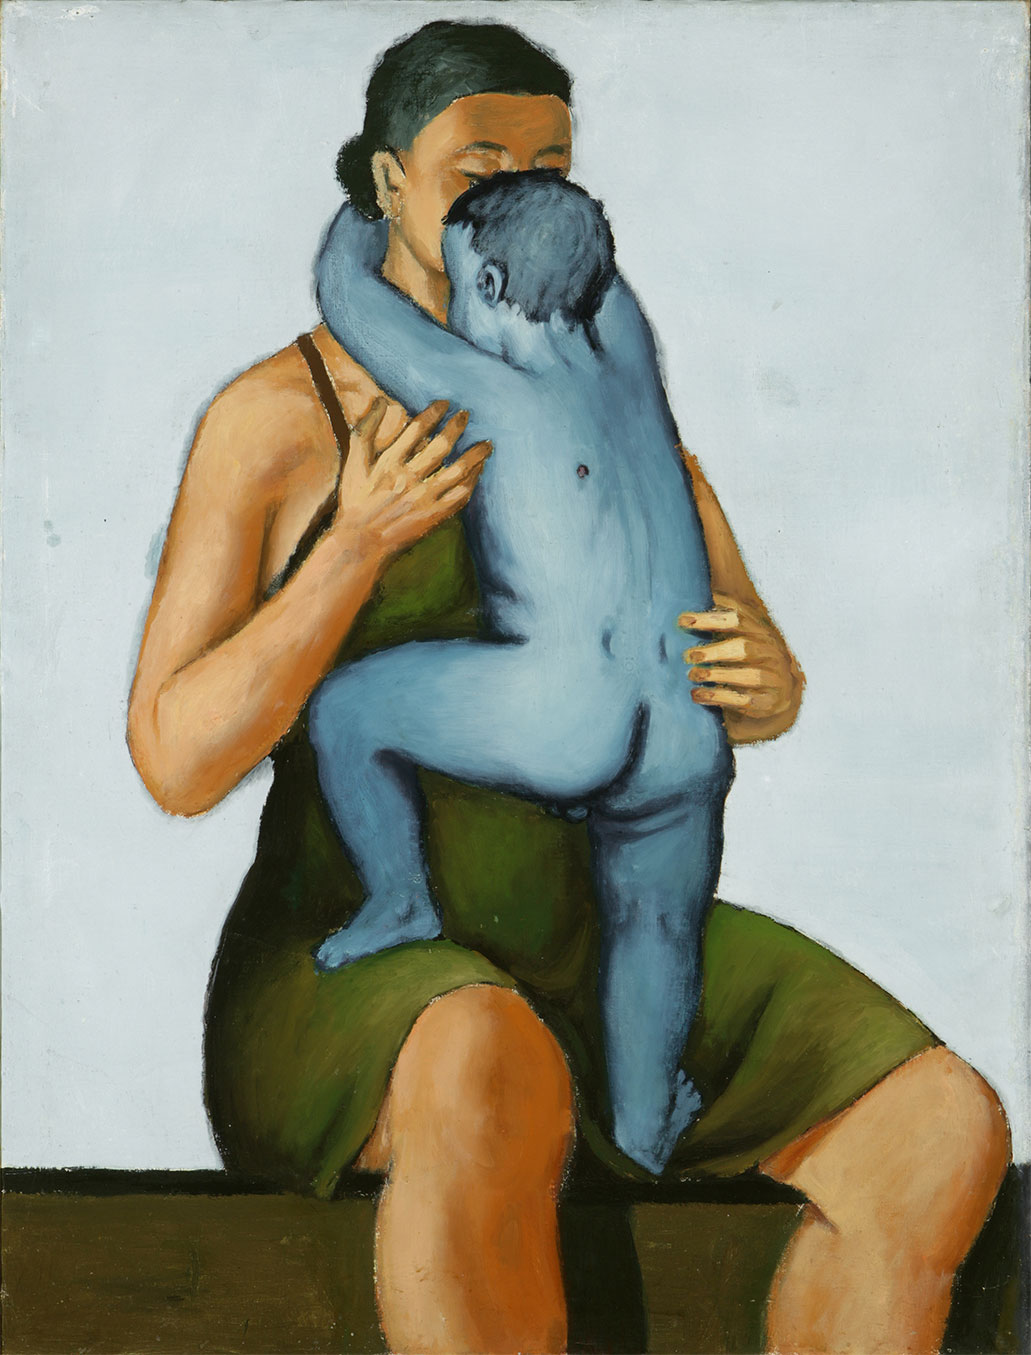 Andrzej Wróblewski. Mother with Dead Child, 1949. Oil on canvas, 120 x 90 cm. Collection of Grażyna Kulczyk. © Andrzej Wróblewski Foundation.